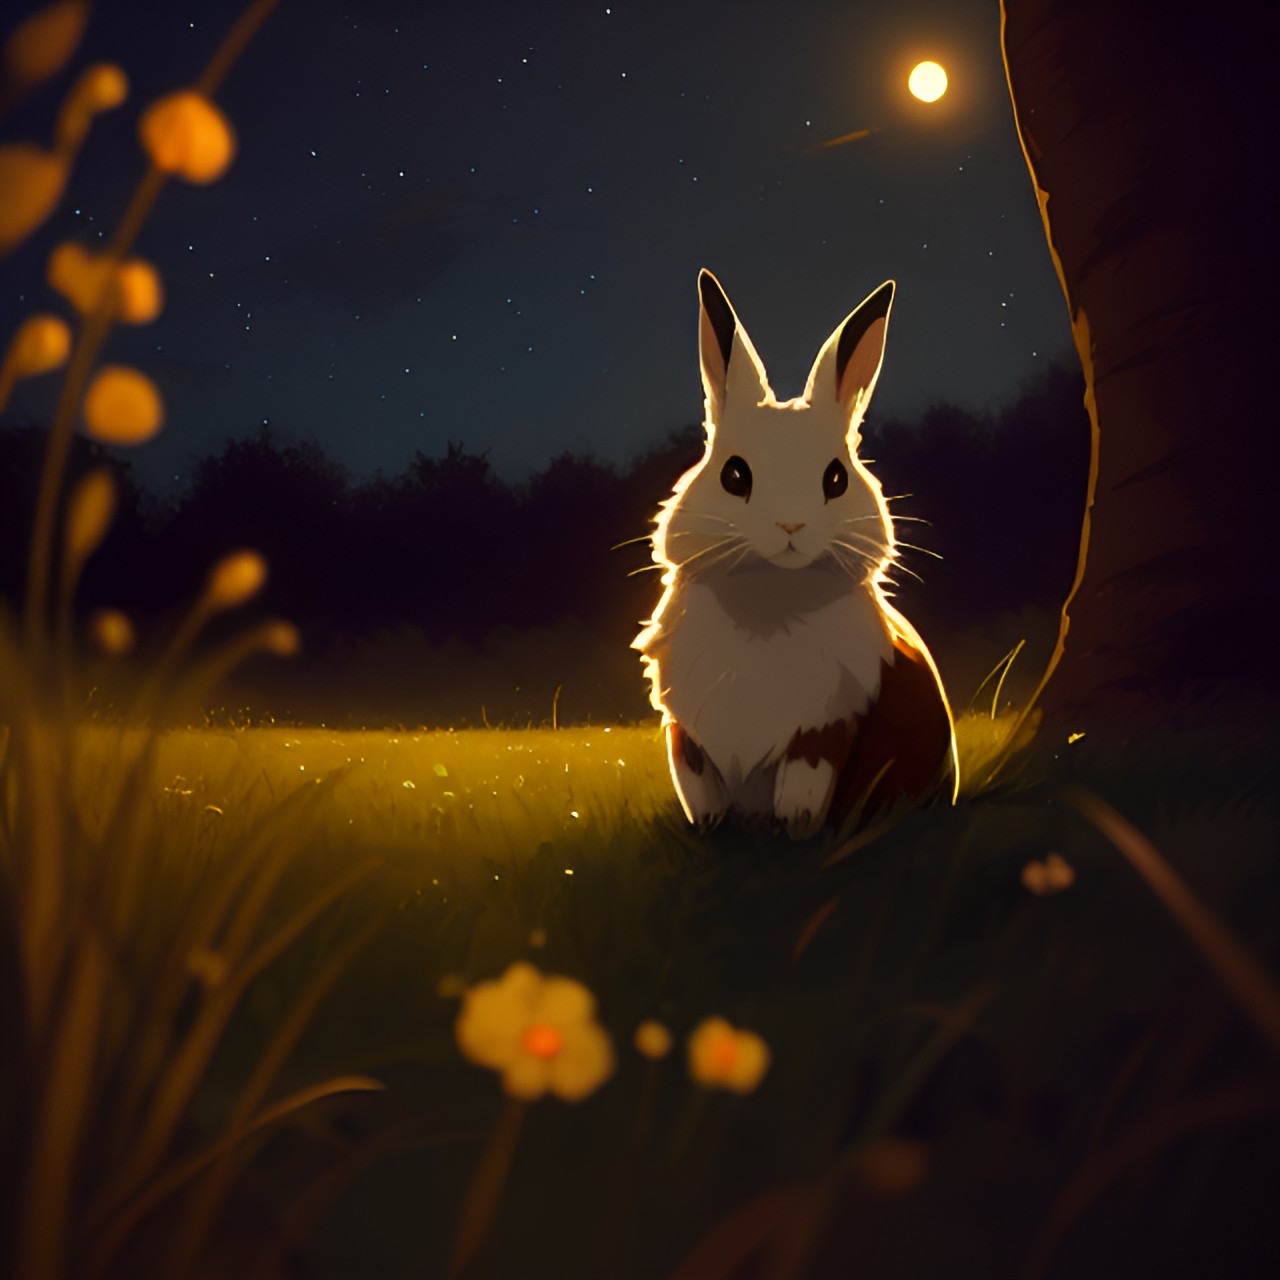 A rabbit hiding in the grass